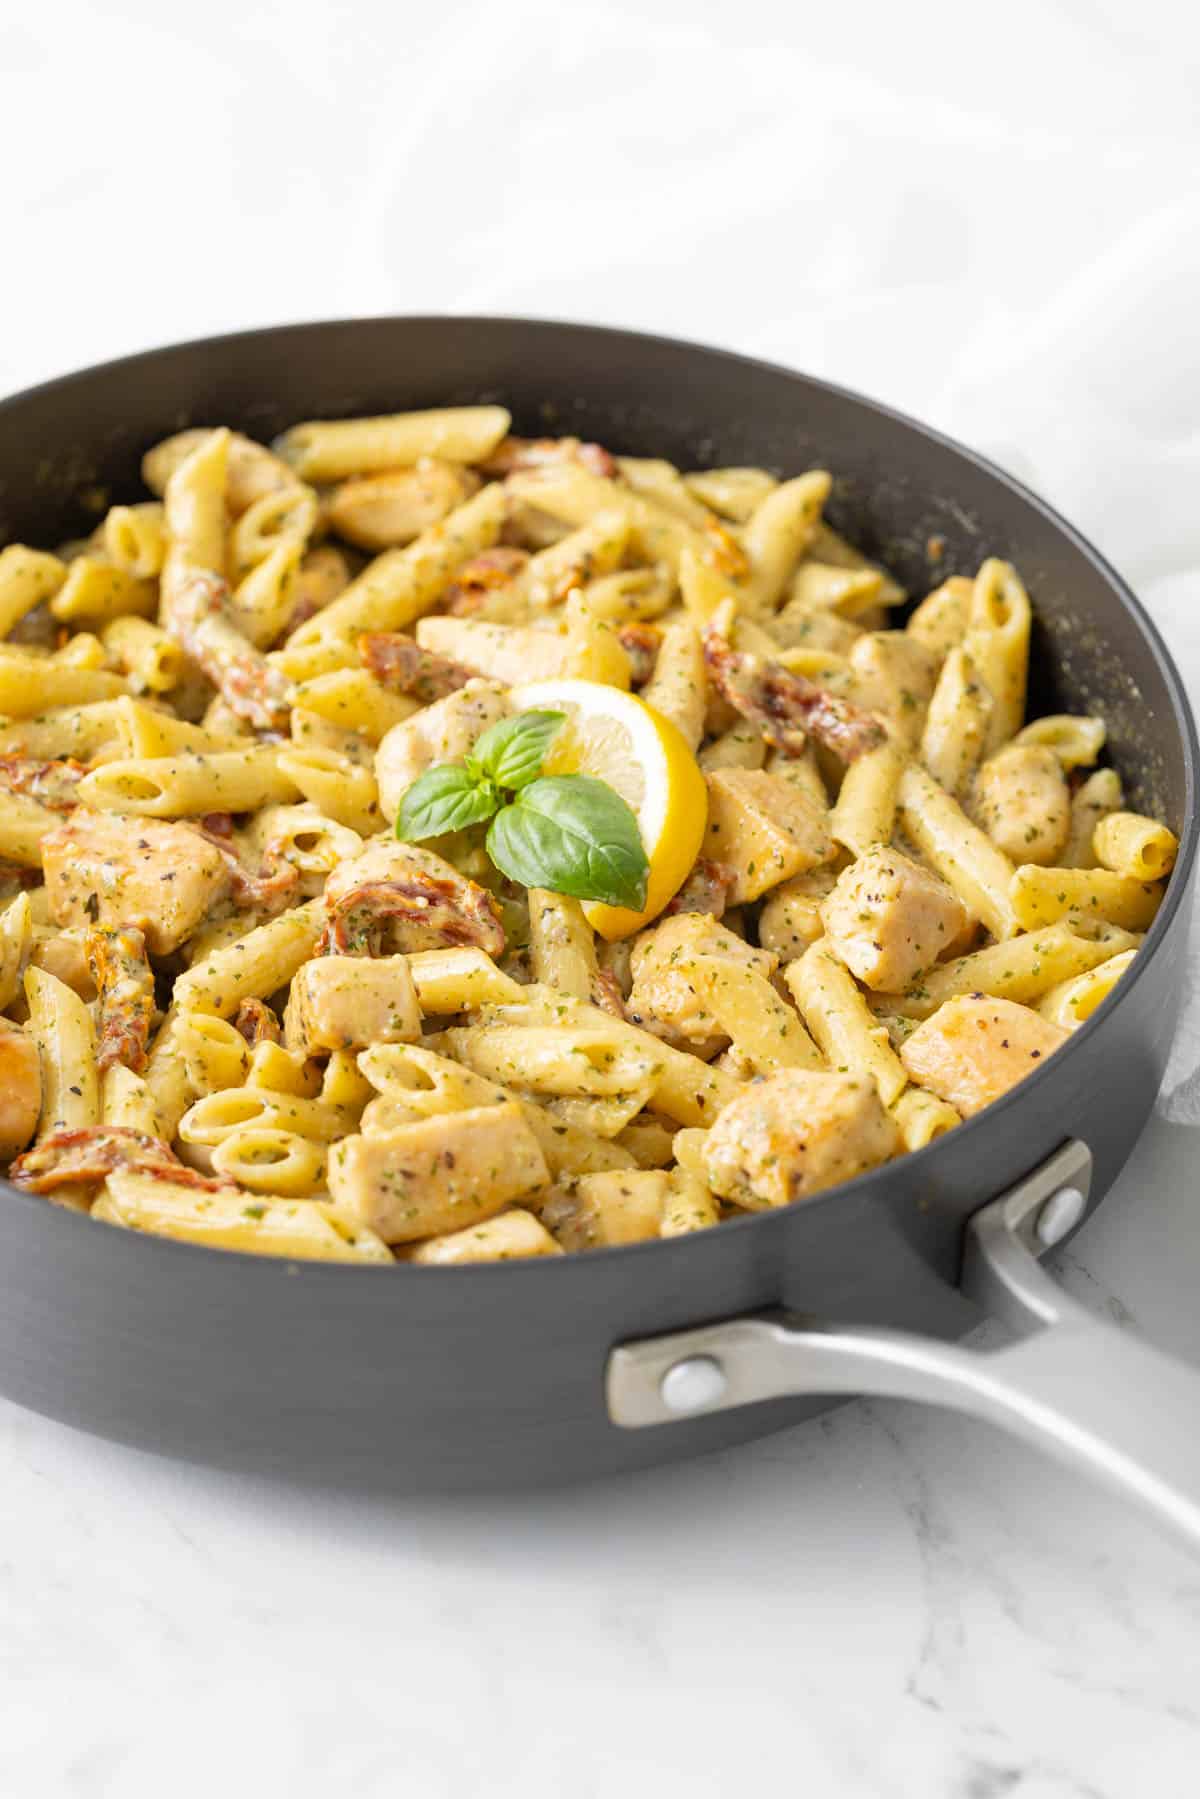 Creamy chicken and pesto pasta in a skillet.